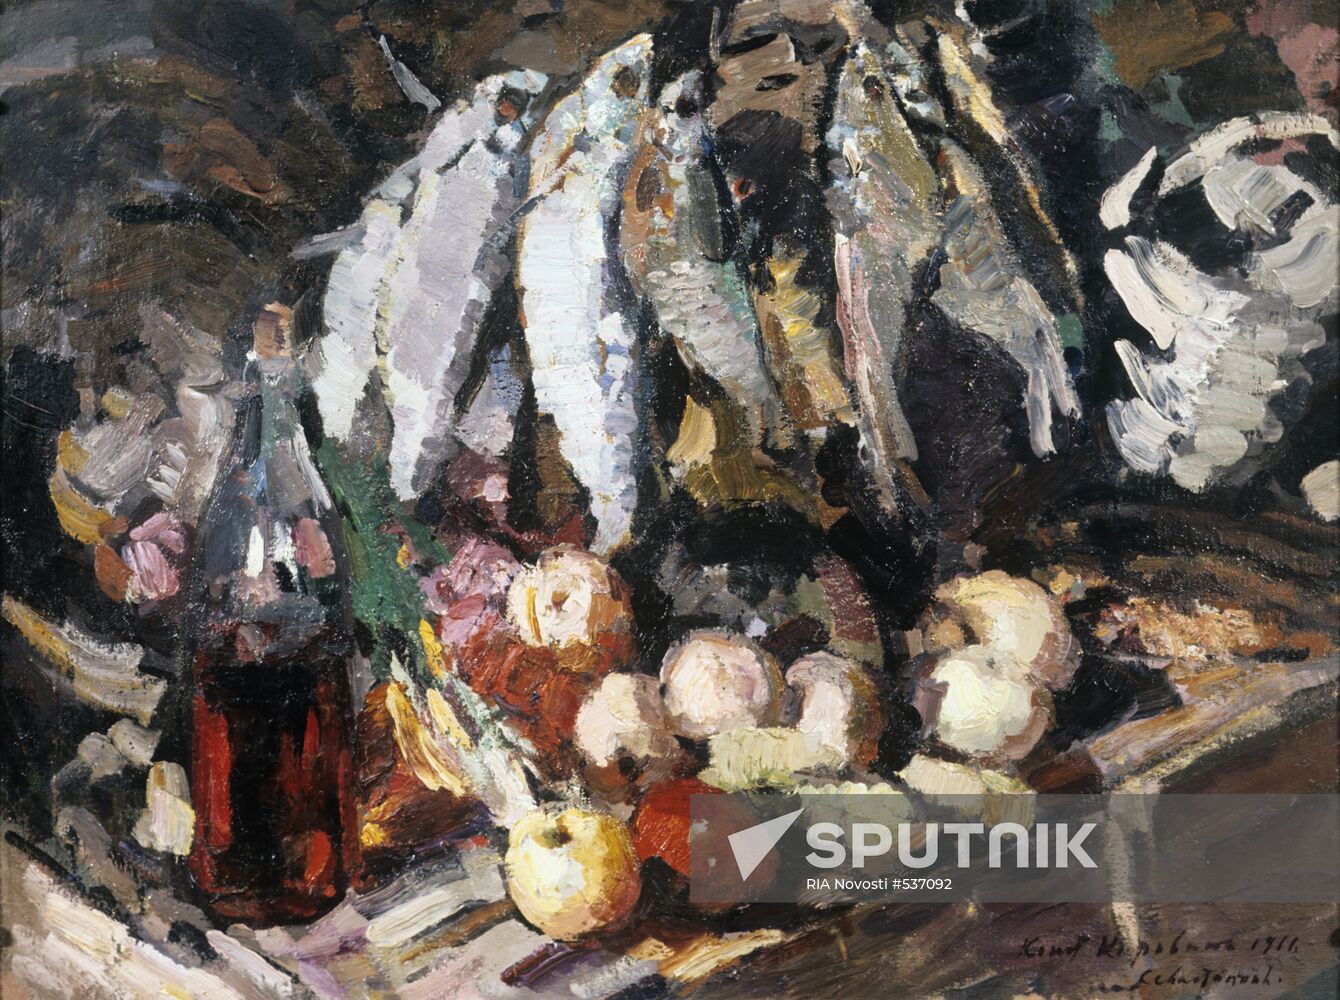 Konstantin Korovin's Fish, Fruit and Wine